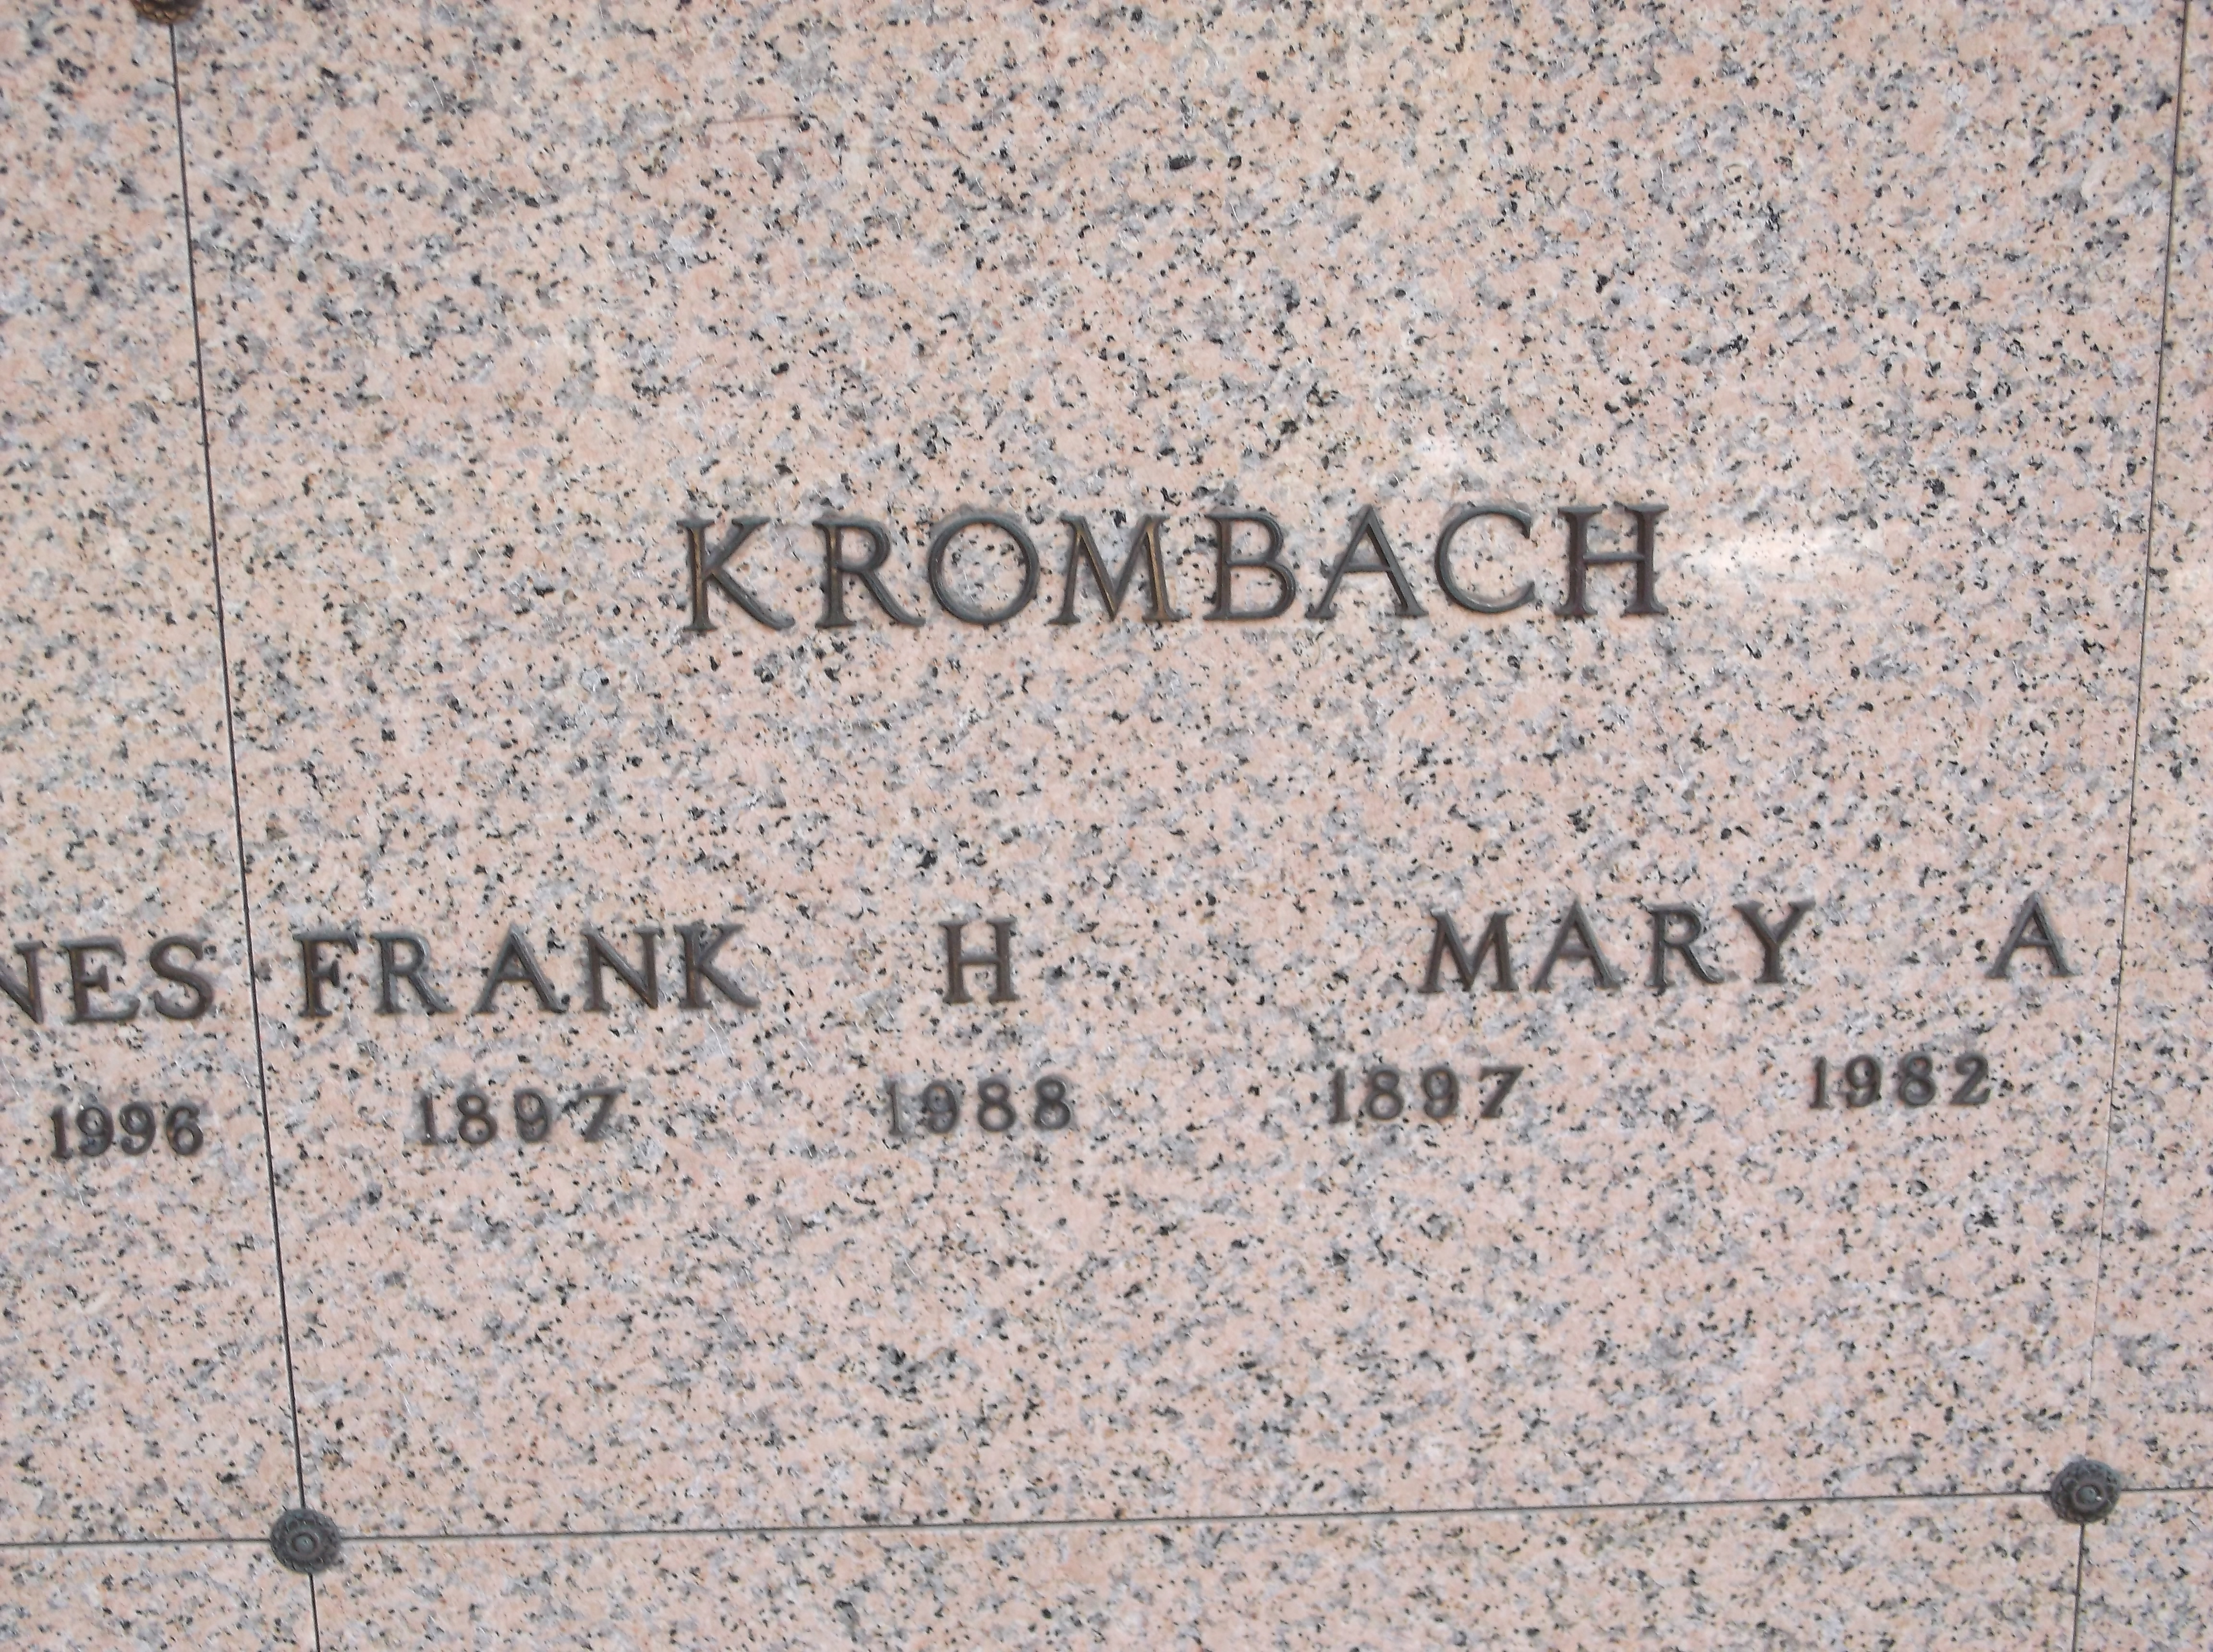 Frank H Krombach